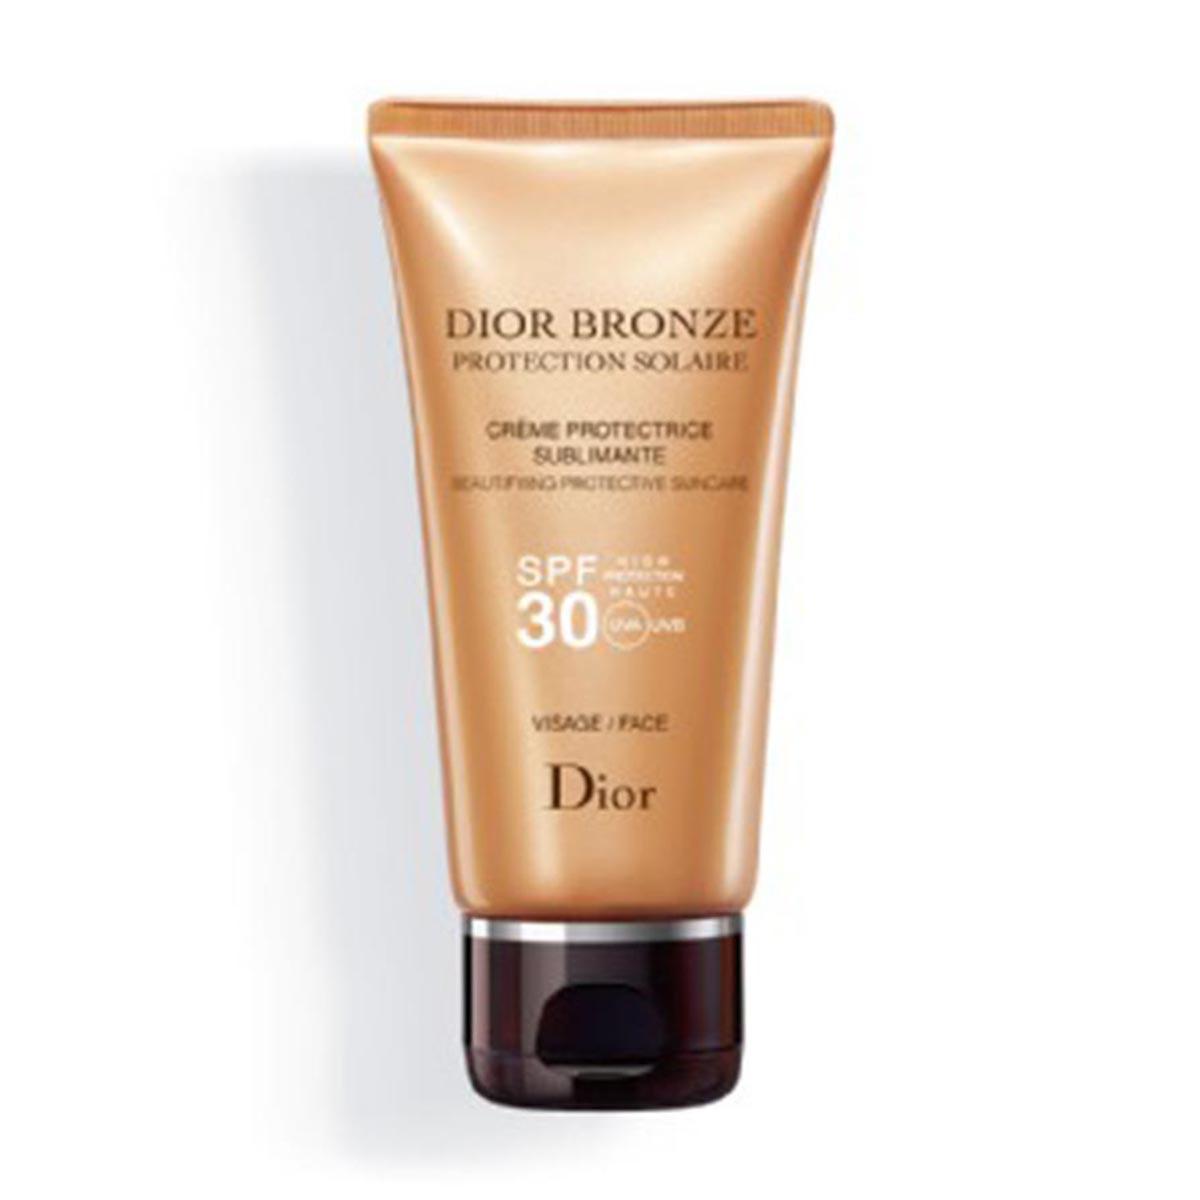 dior-bronze-protective-creme-sublime-glow-face-spf30-50ml